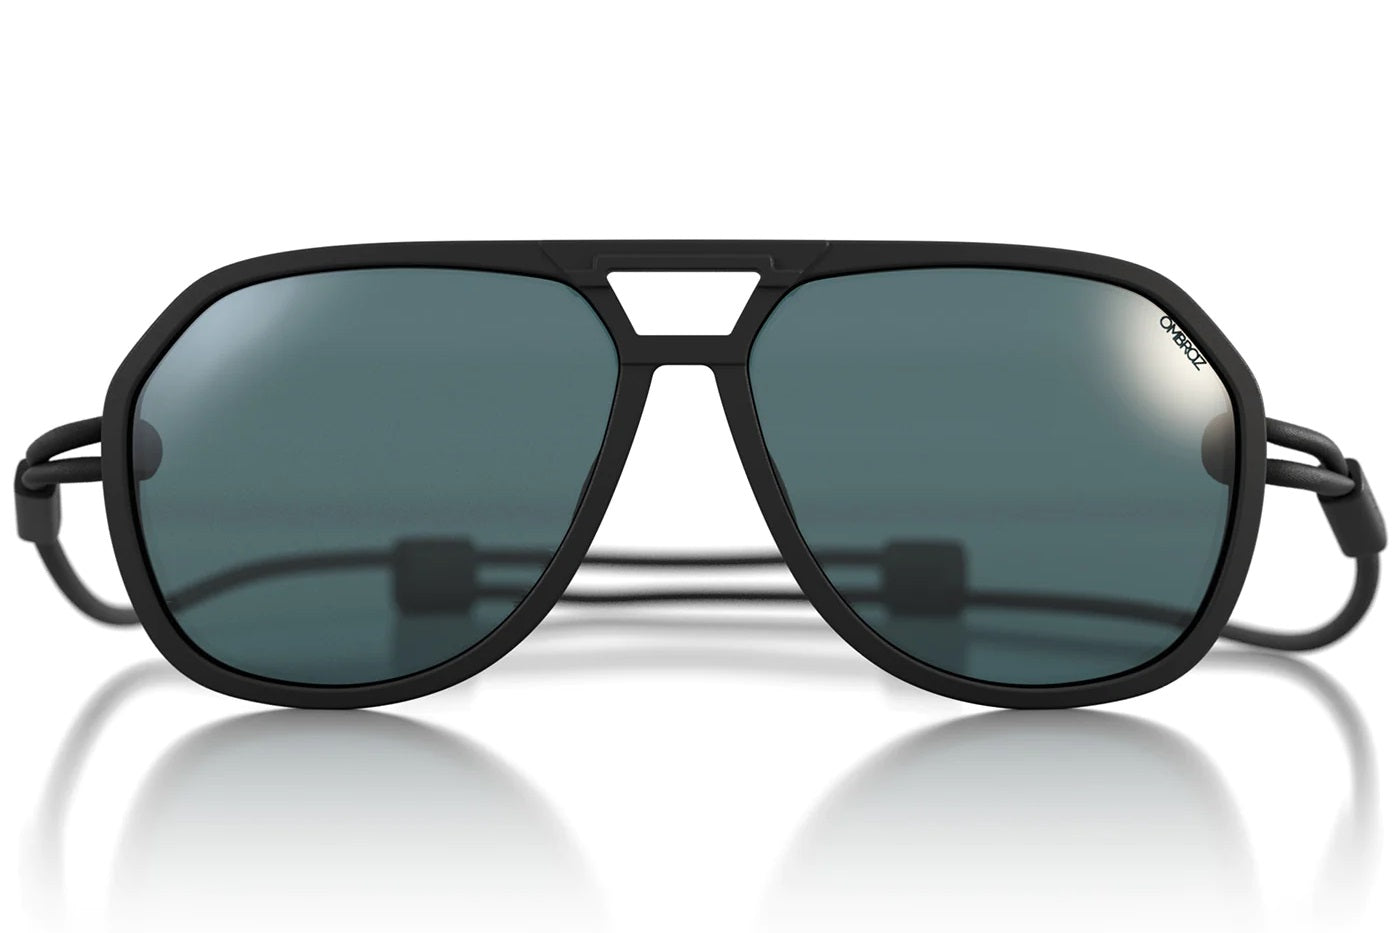 Ombraz Classic Sunglasses - Charcoal w/ Polarized Grey Lenses Regular - Sunglasses - Classic Sunglasses